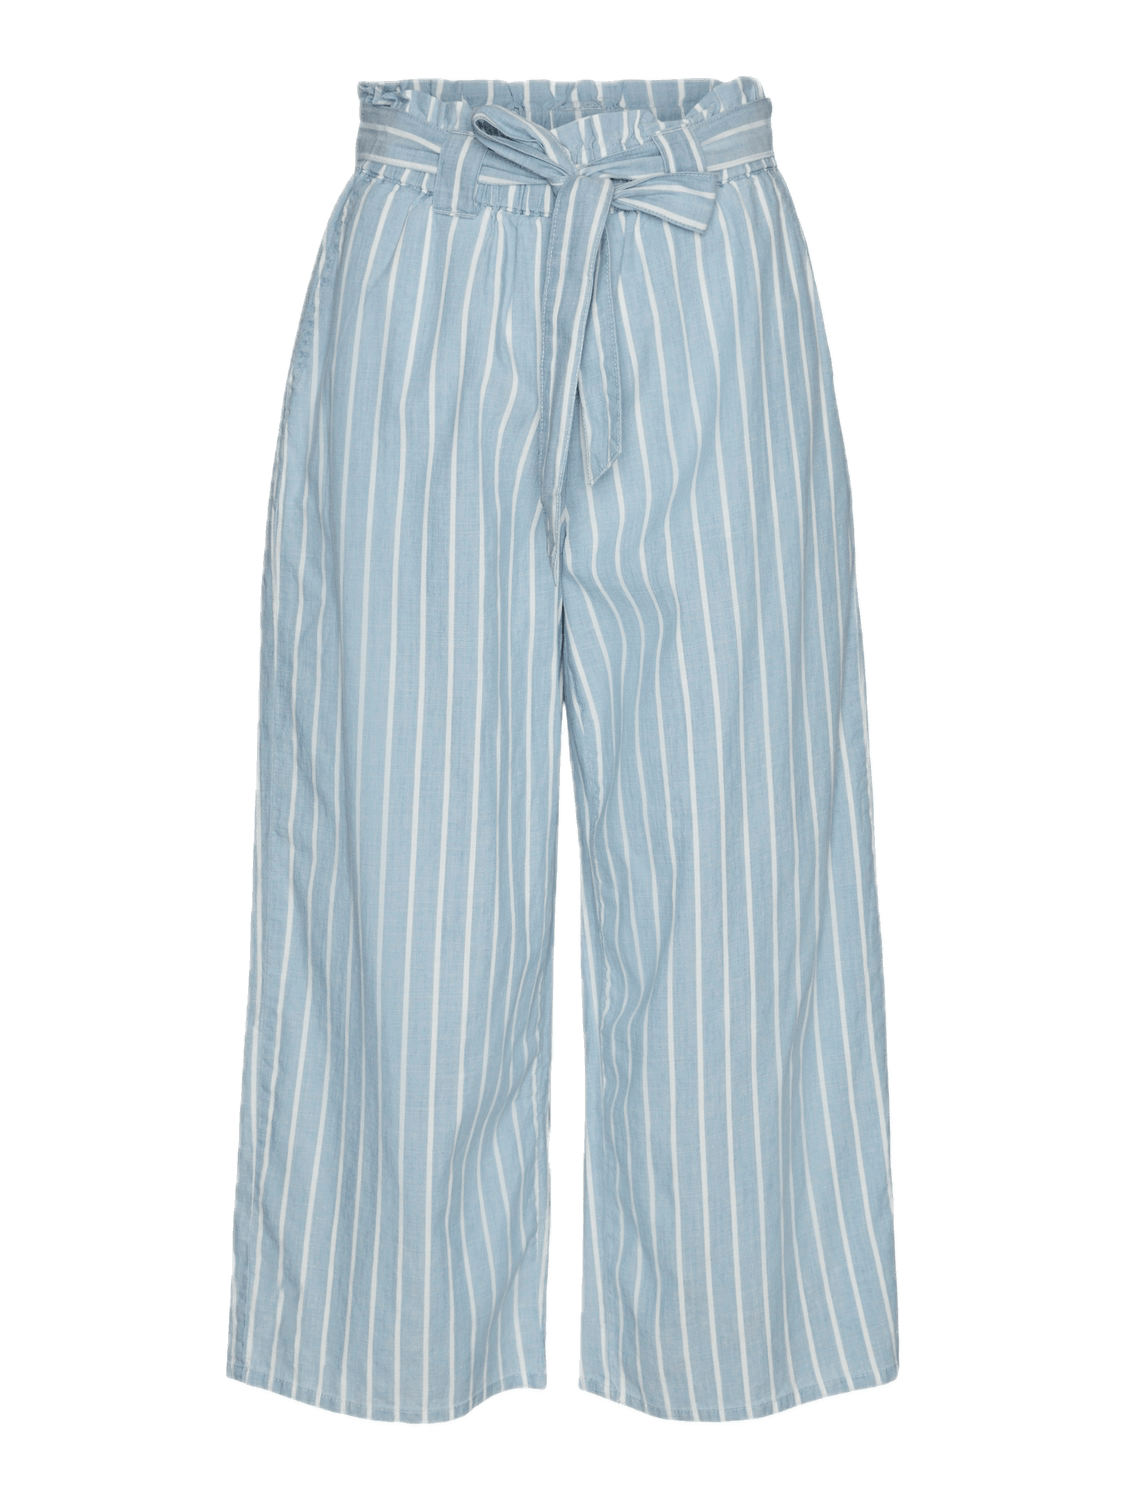 Pantalones Vero Moda Xenia - ECRU